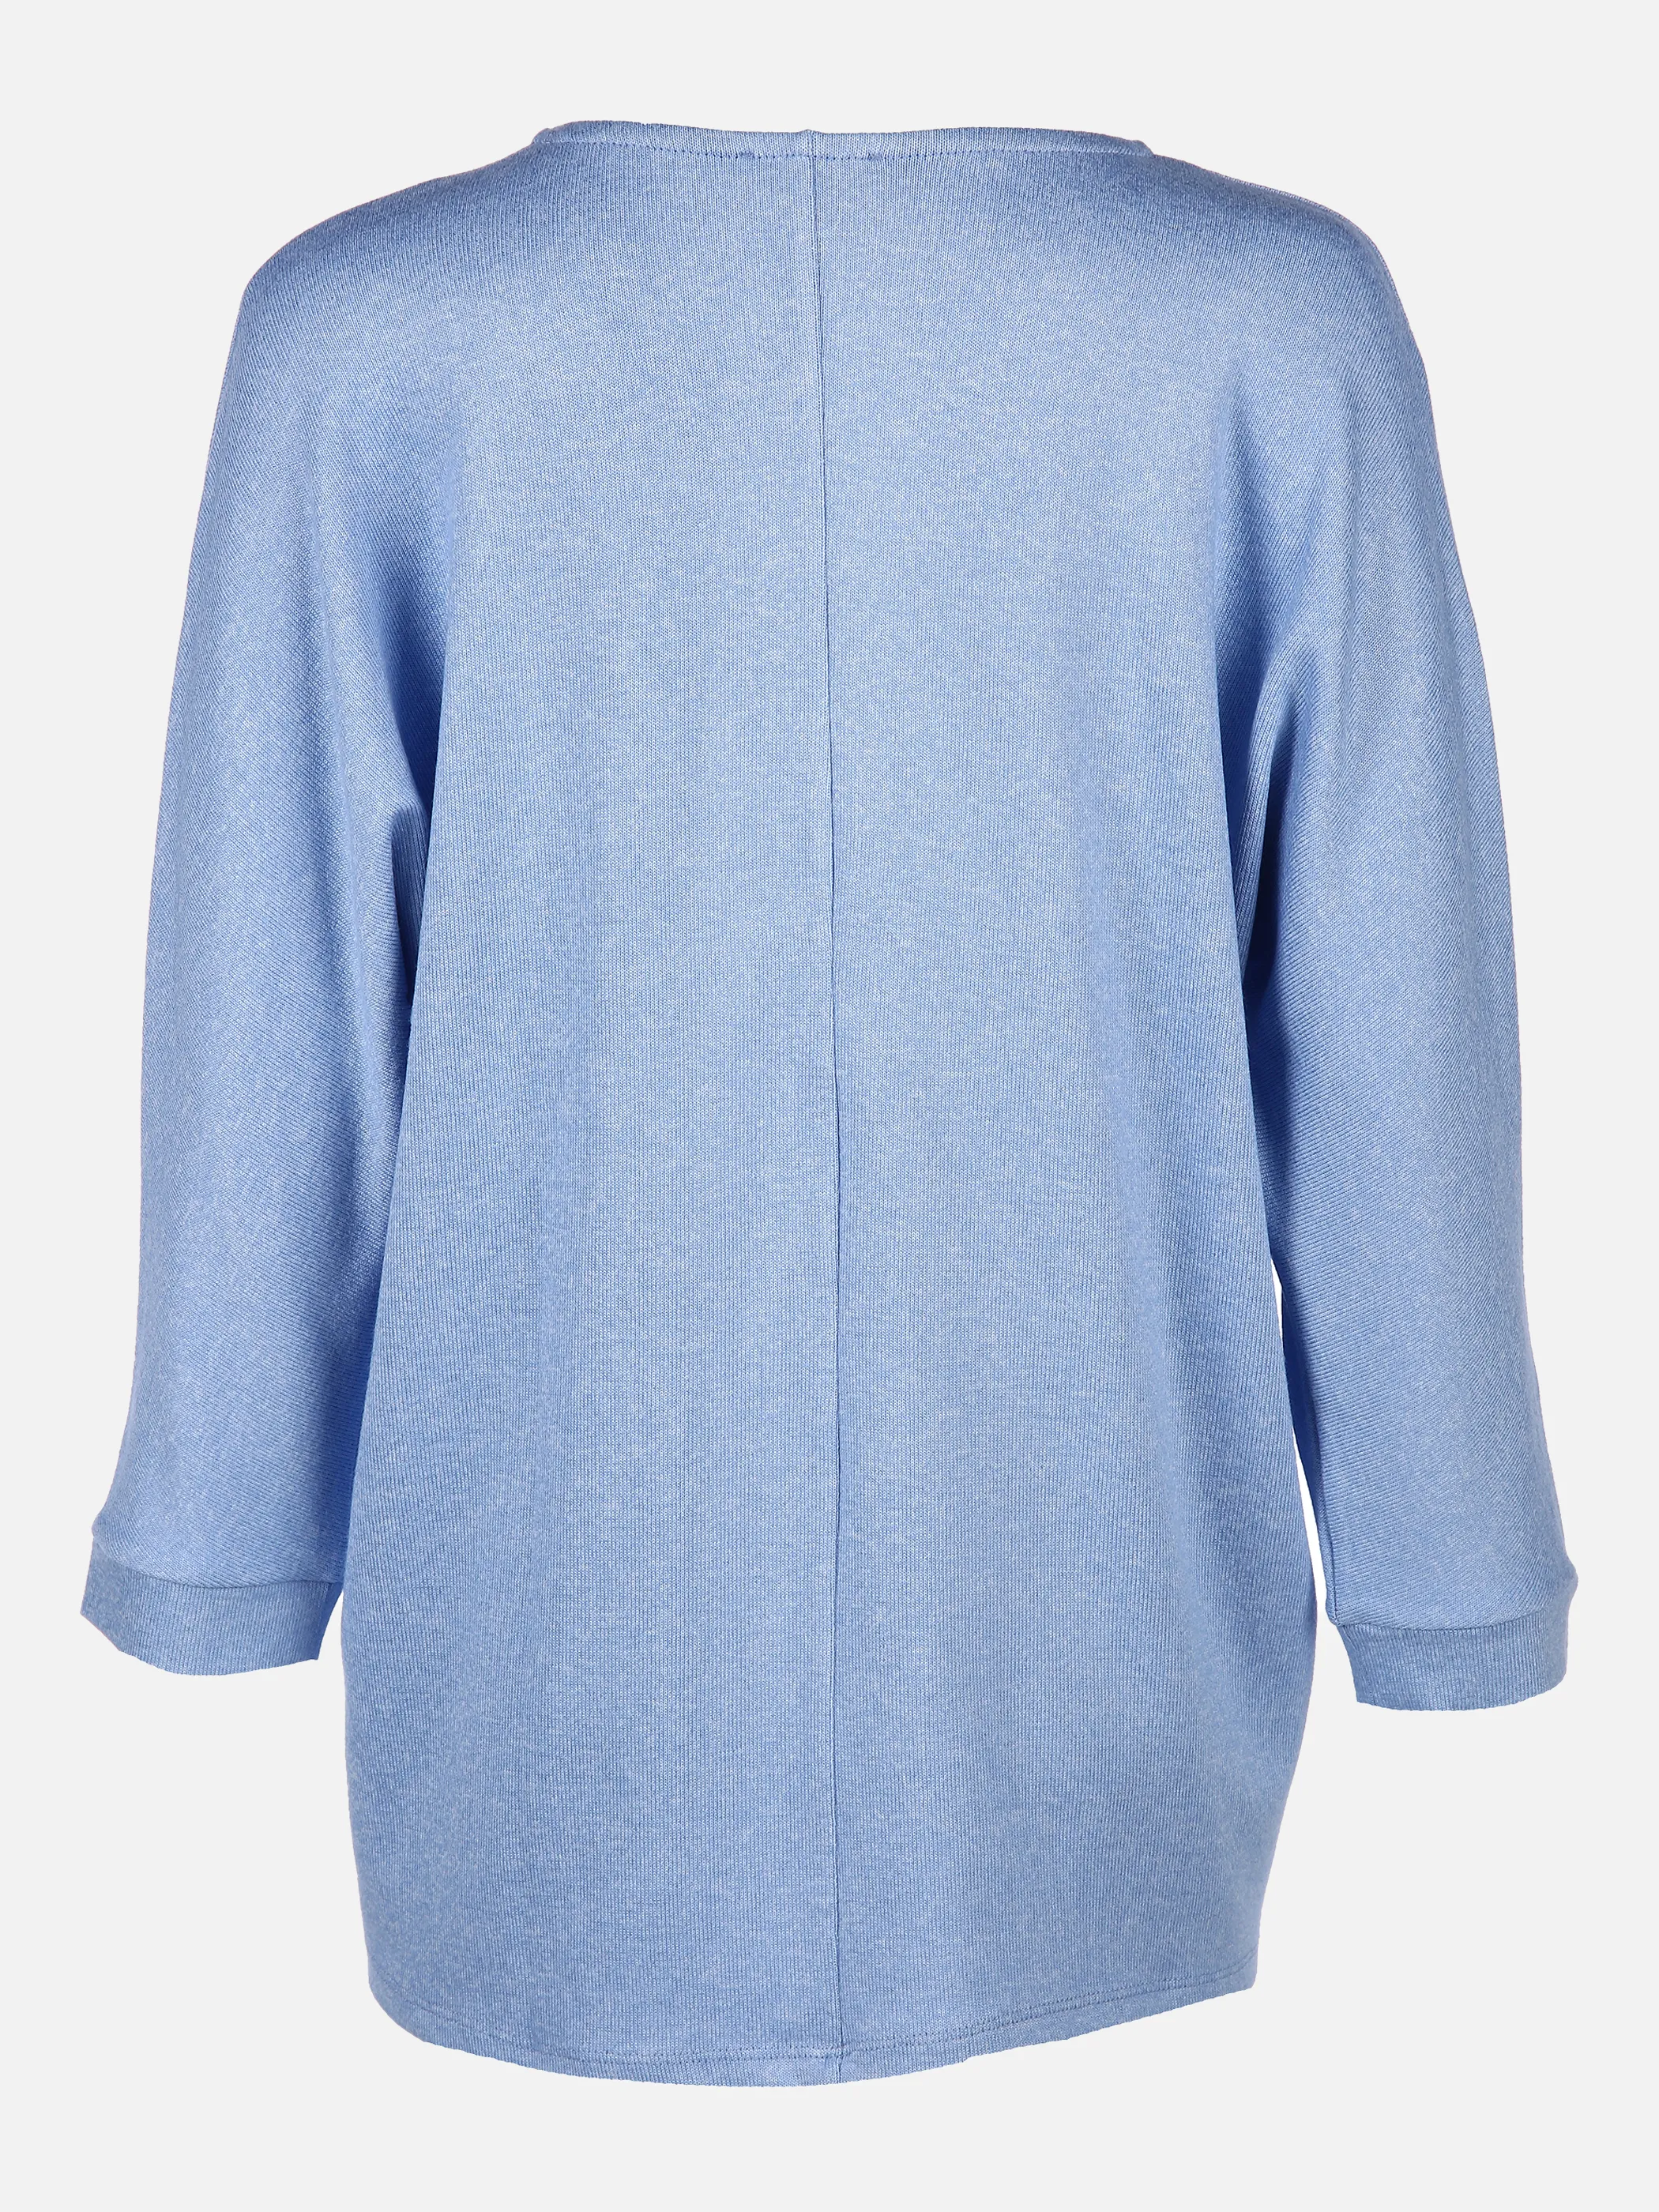 SURE Collection Da-Sweatshirt in Strickoptik Blau 834575 MID BLUE 2